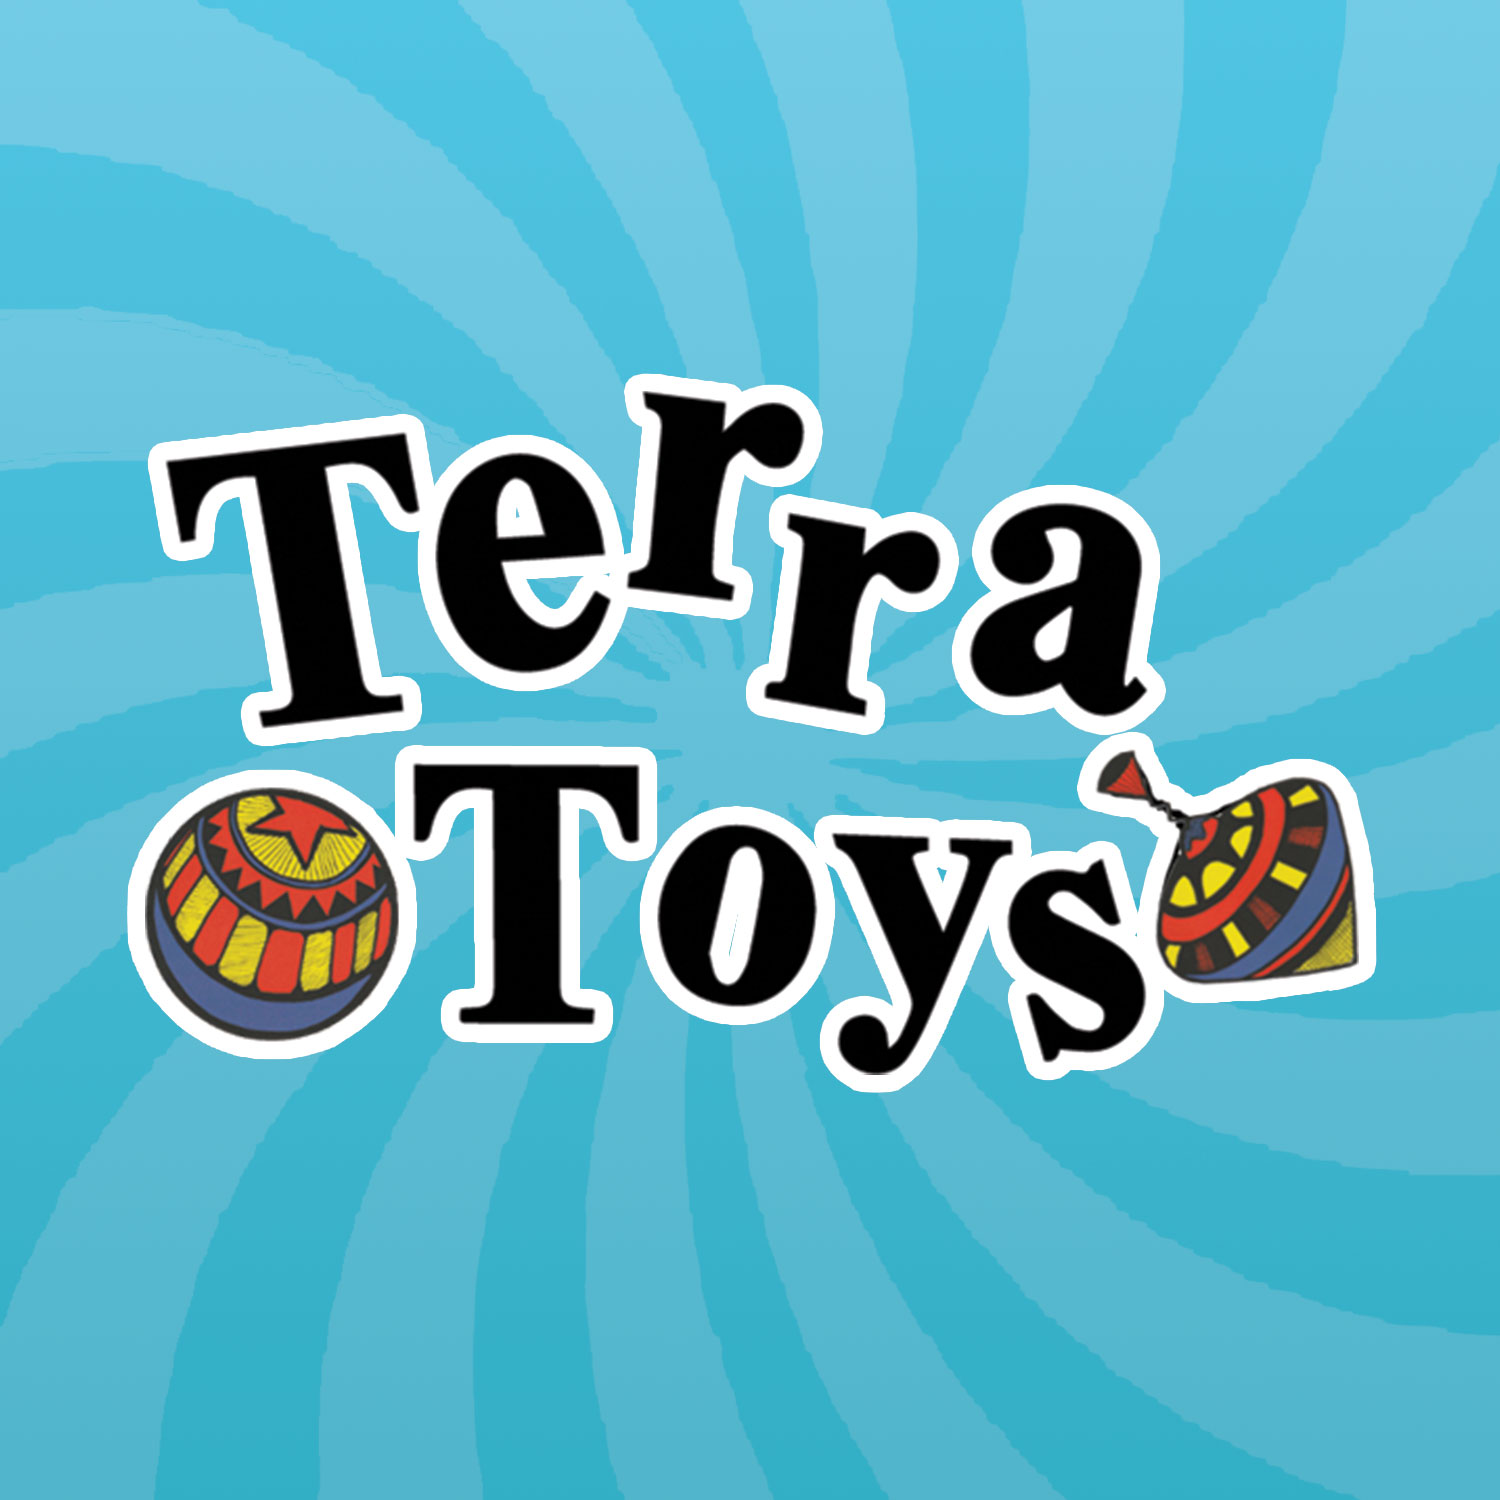 Terra Toys